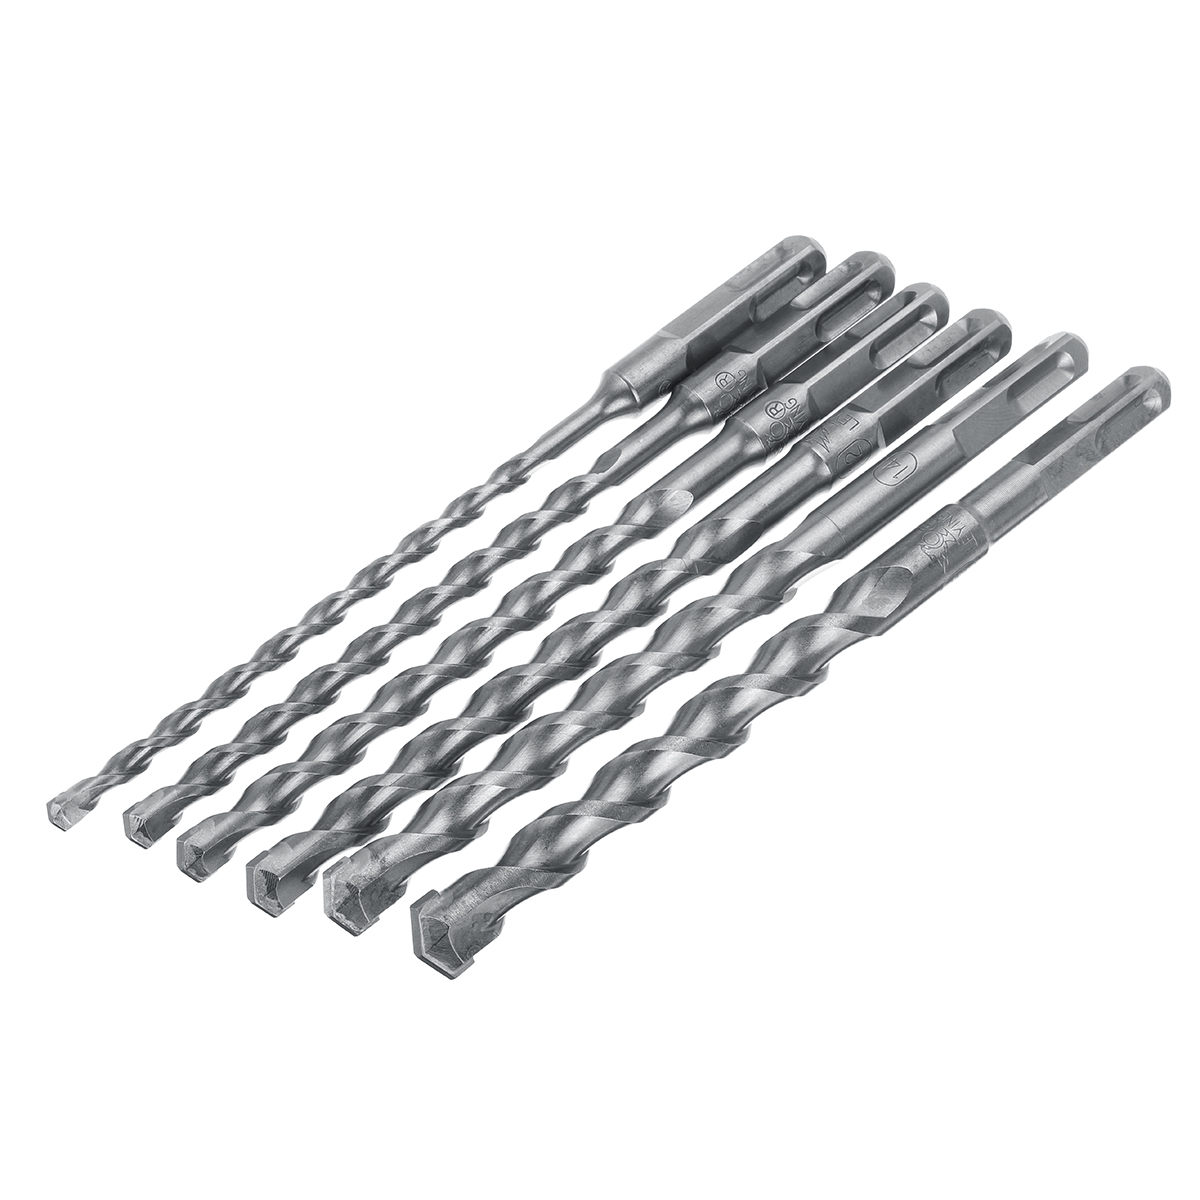 Masonry-Hammer-Drill-Bit-for-Tiles-Concrete-Brick-Hardened-Chrome-Alloy-Steel-Flat-Drill-Bit-1651151-2